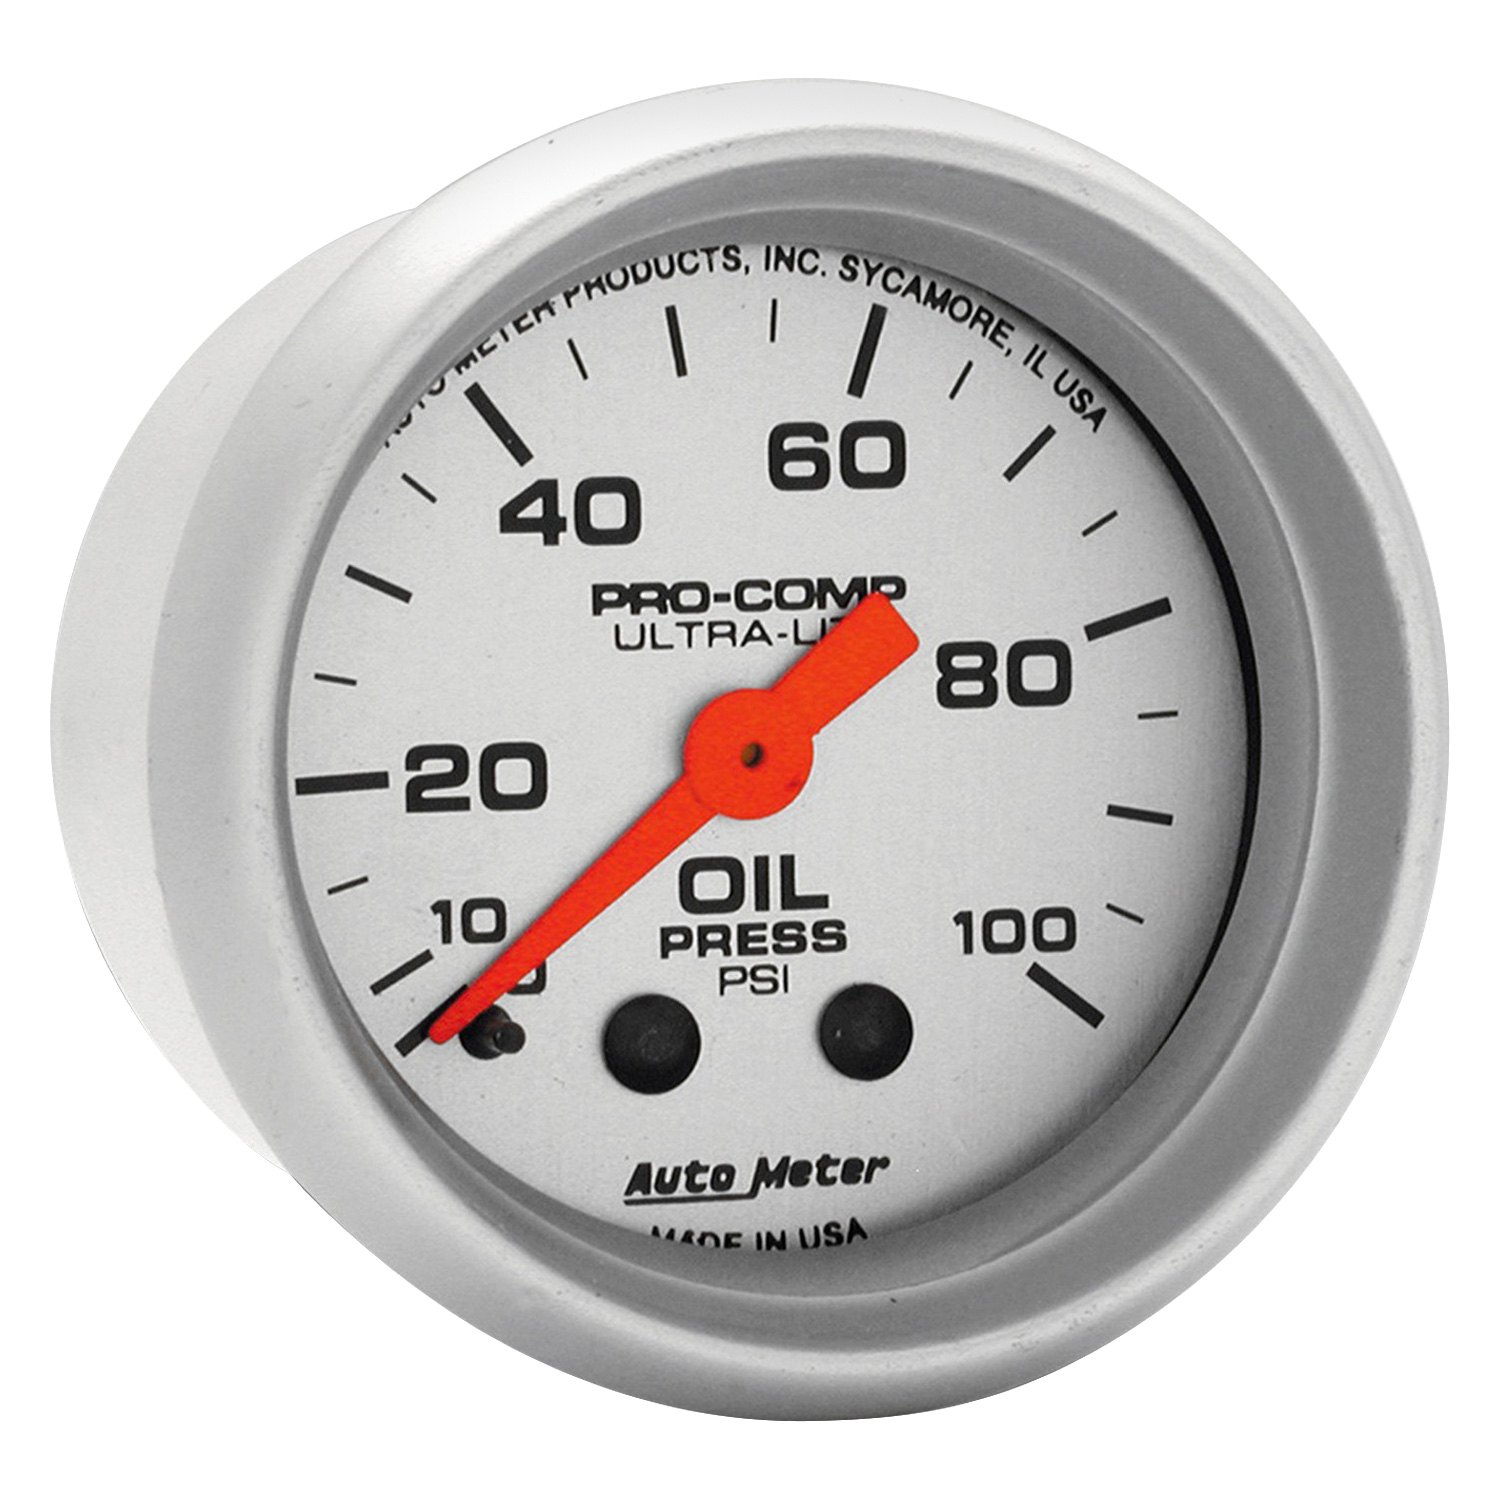 2 1 psi. Autometer. Манометр давления масла механический. 2 Psi давление масла. Oil Pressure Gauge.